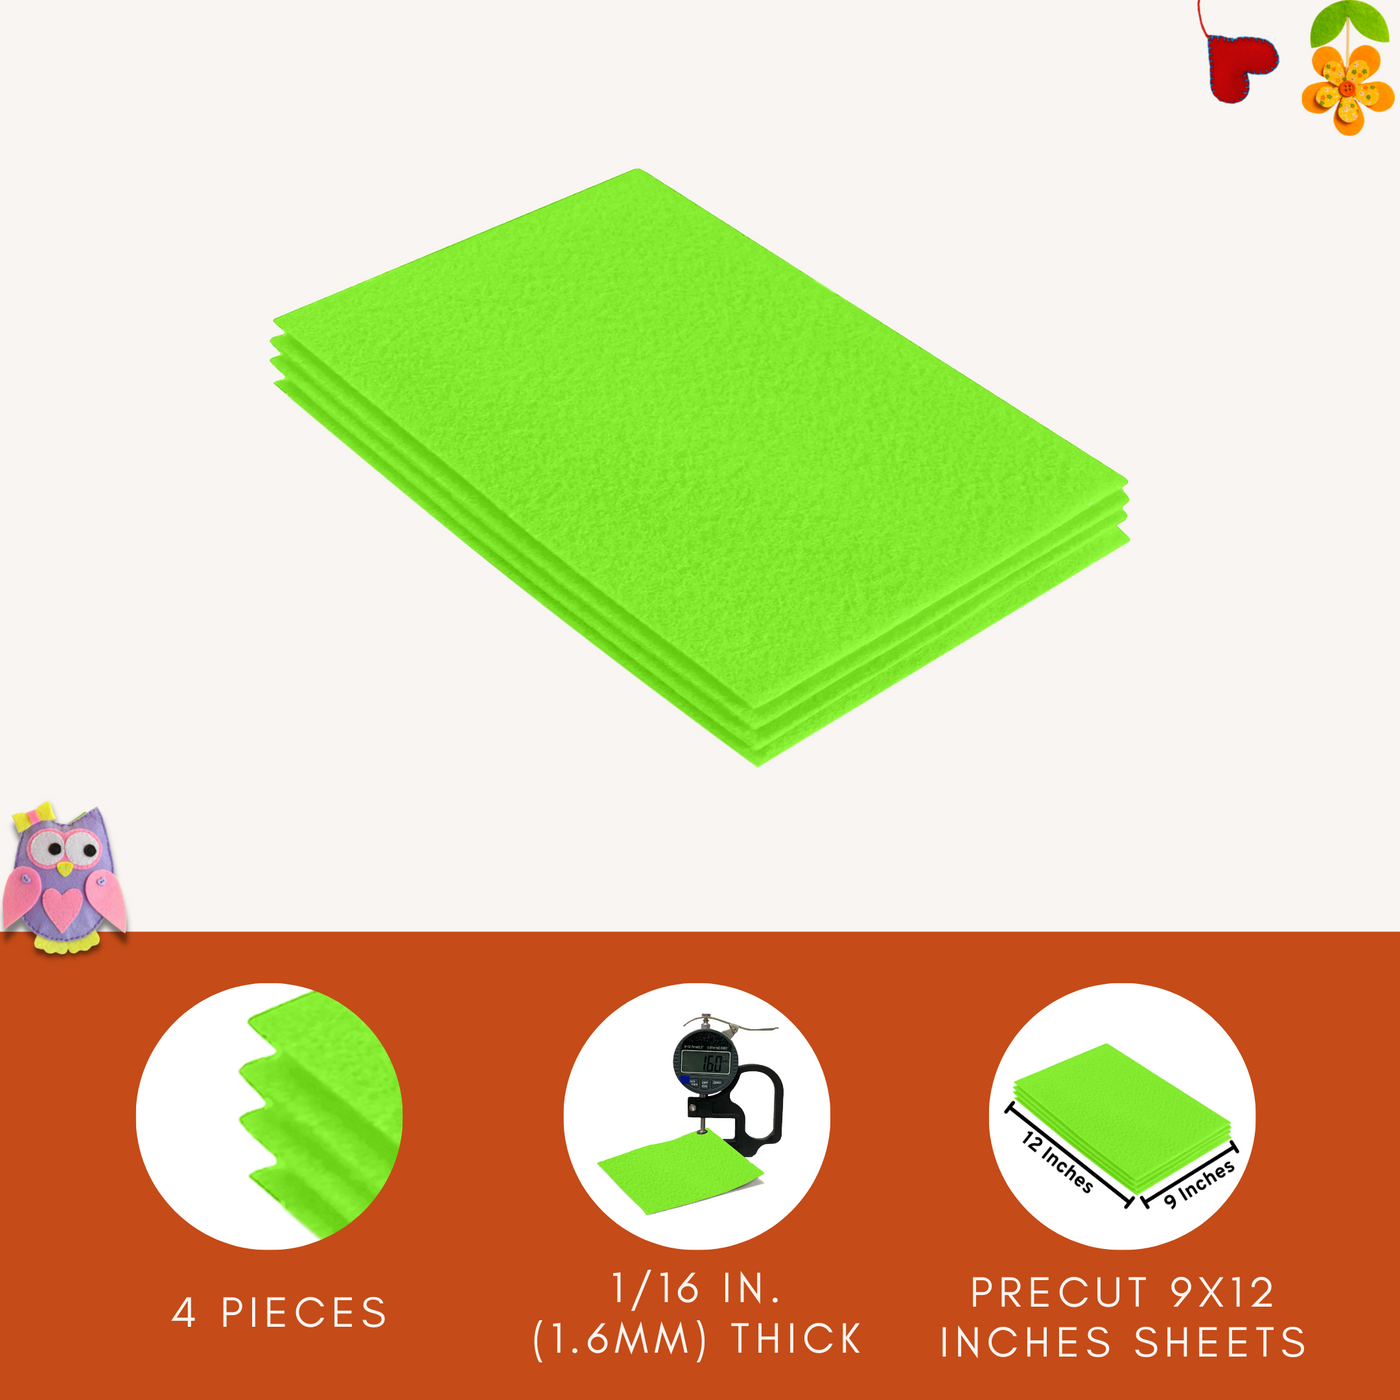 Acrylic Felt 9"X12" Sheet Packs | Neon Green - FabricLA.com